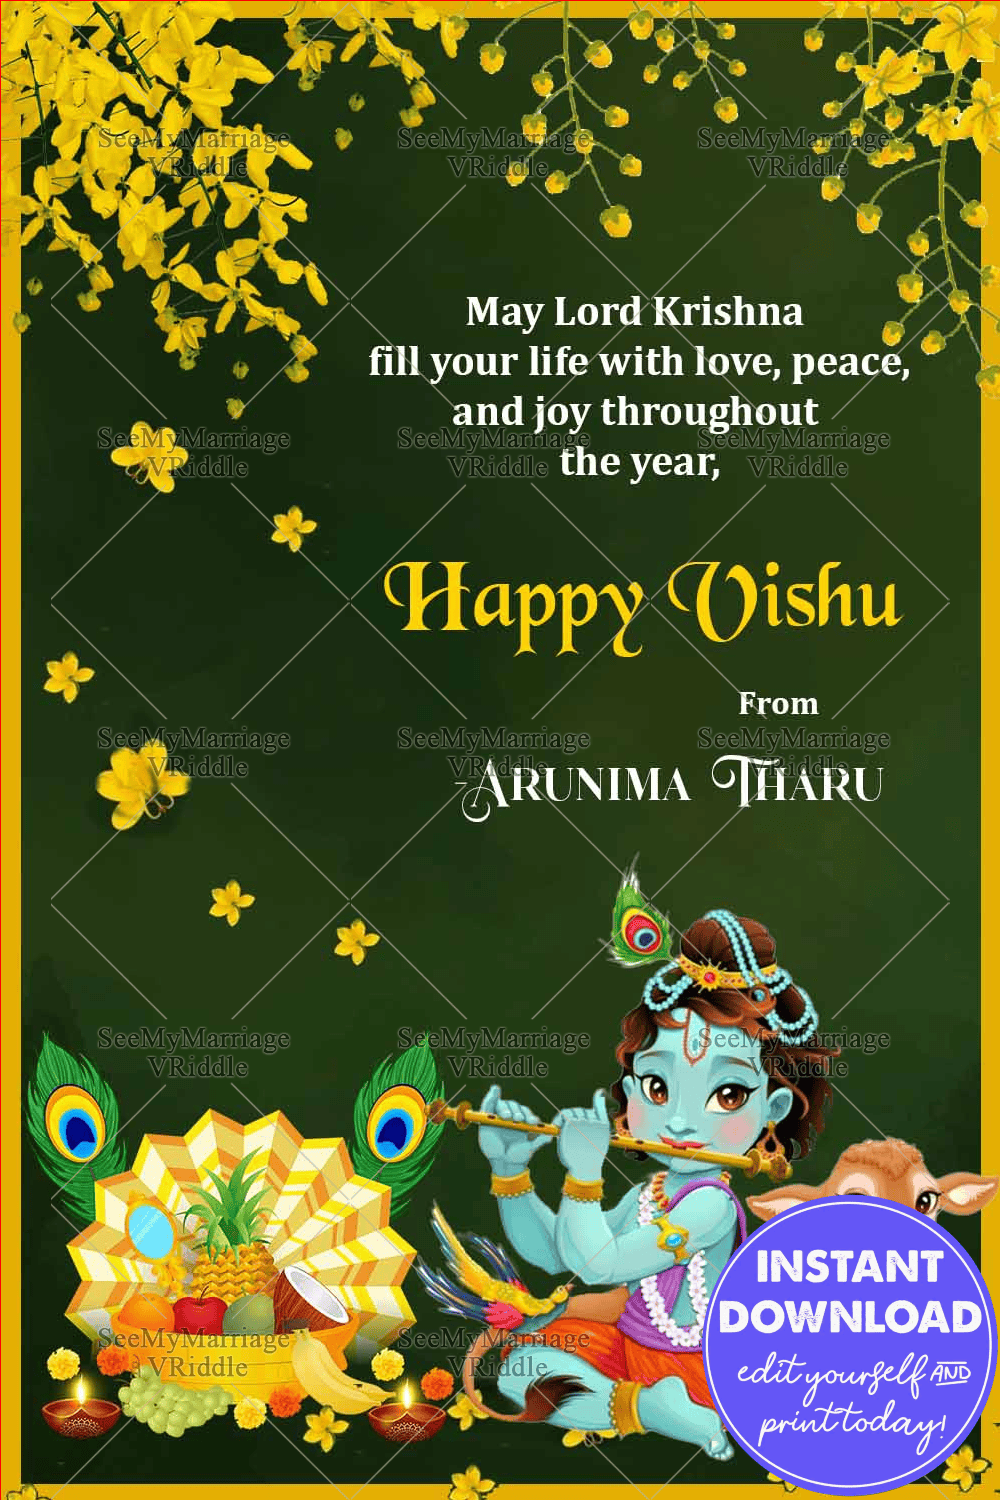 Happy-vishu-Greeting-krishna-green-yellow-theme